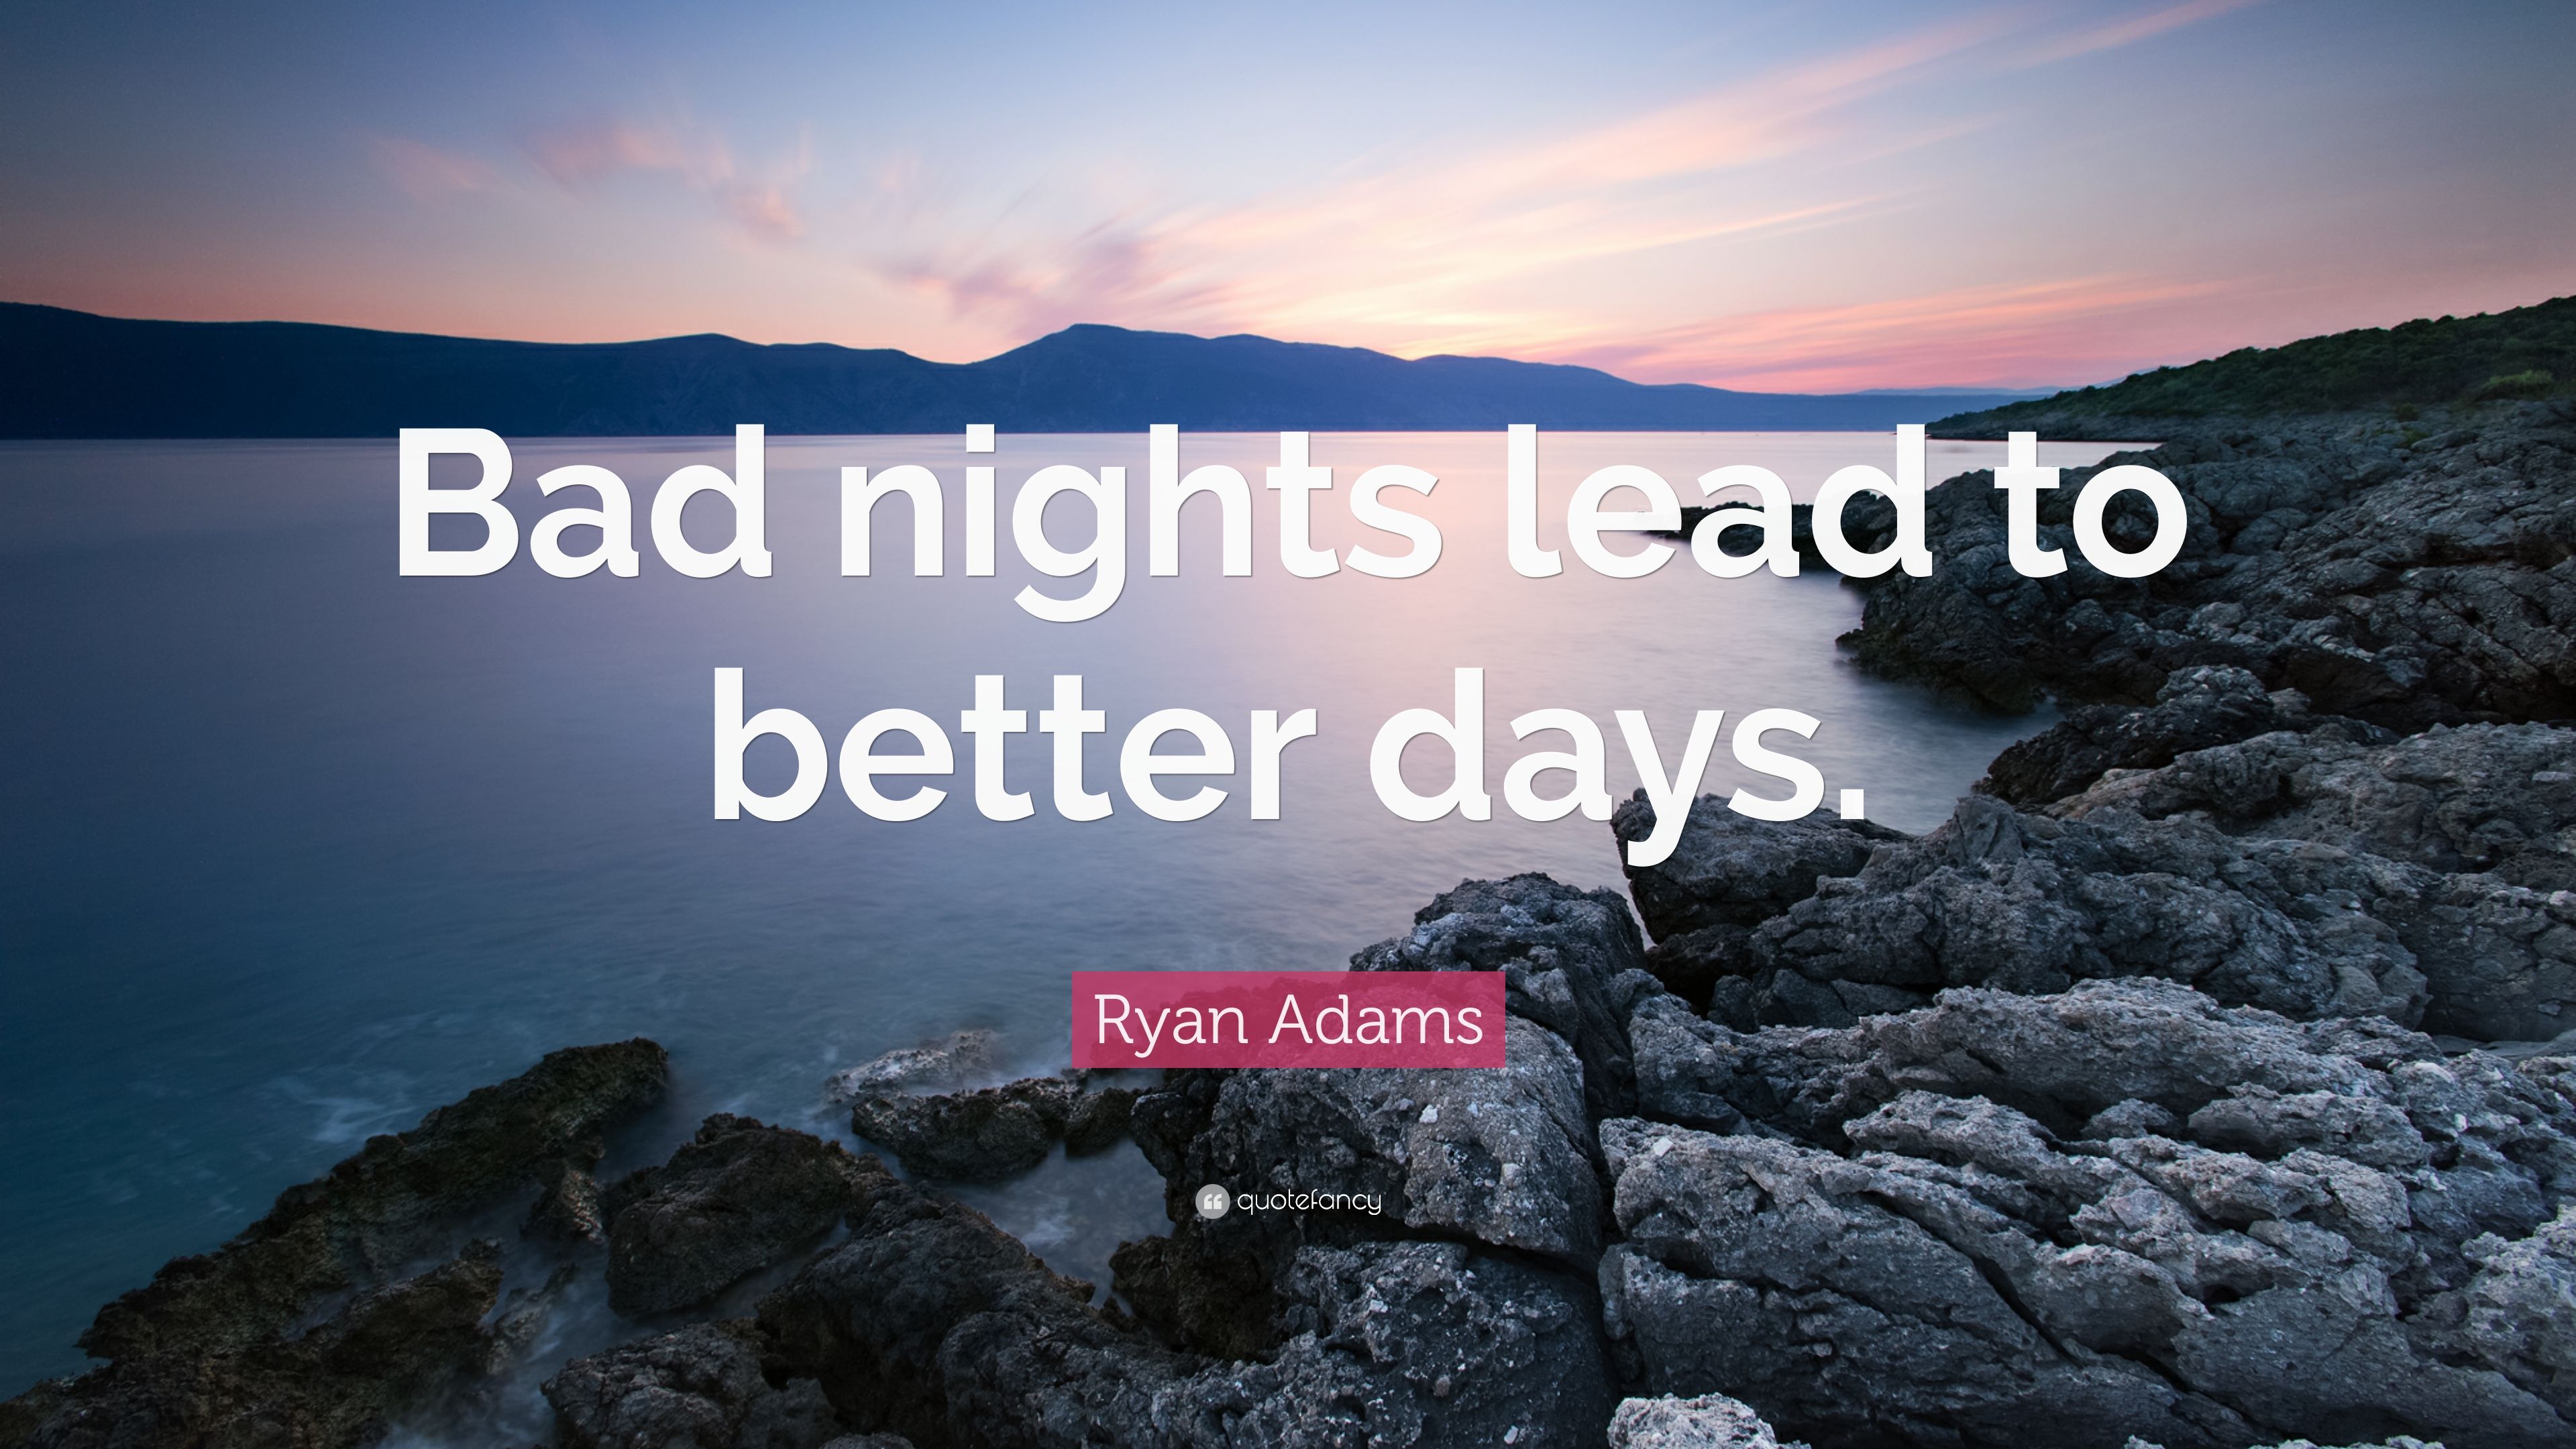 Ryan Adams Quote: “Bad nights lead to .quotefancy.com